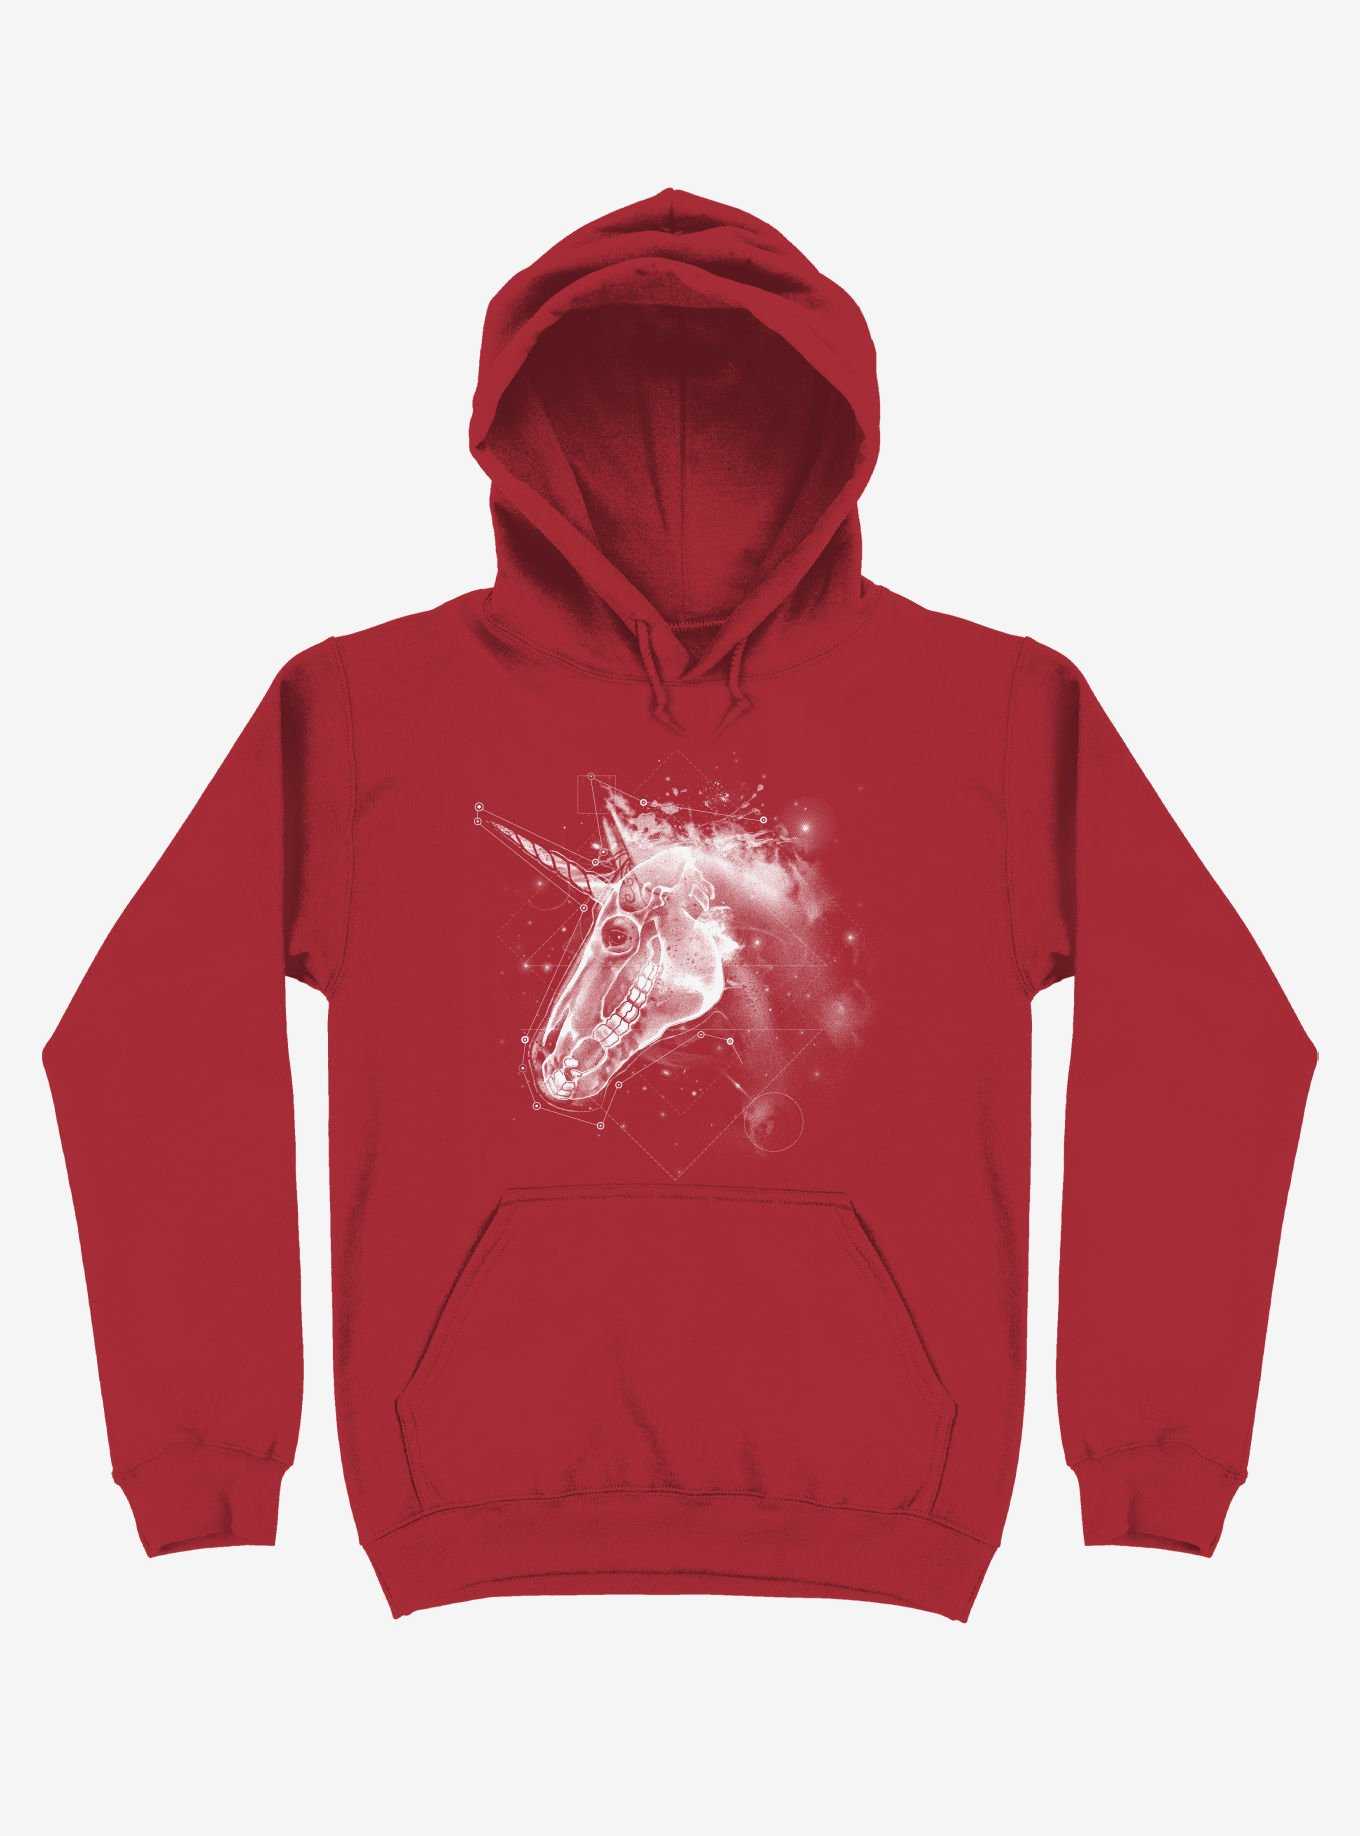 Space Constellation Unicorn Red Hoodie, , hi-res